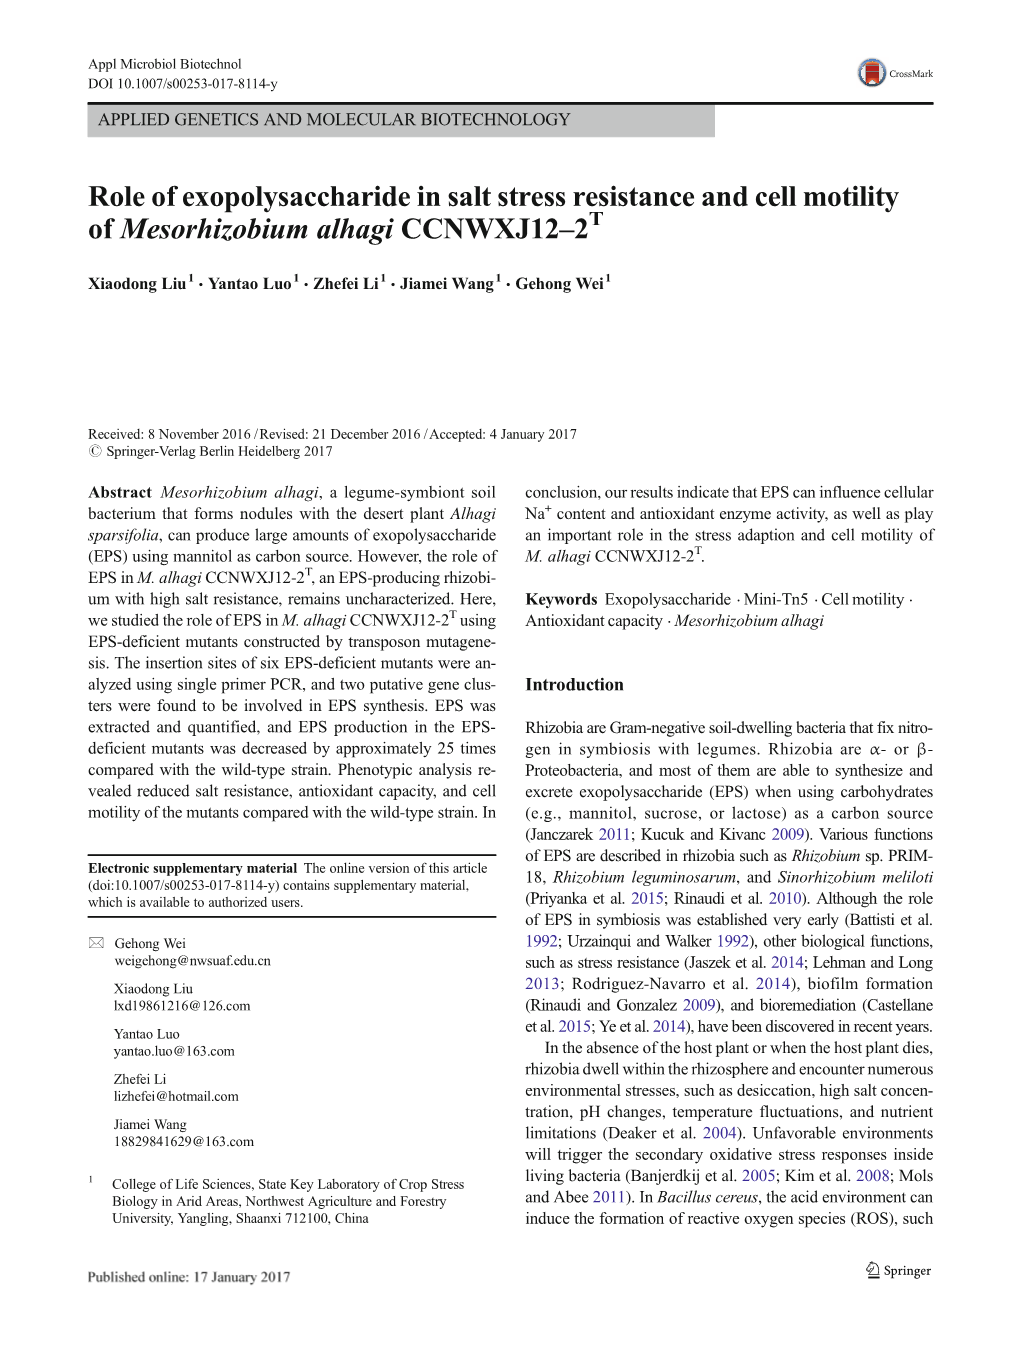 Role of Exopolysaccharide in Salt Stress Resistance and Cell Motility of Mesorhizobium Alhagi CCNWXJ12–2T